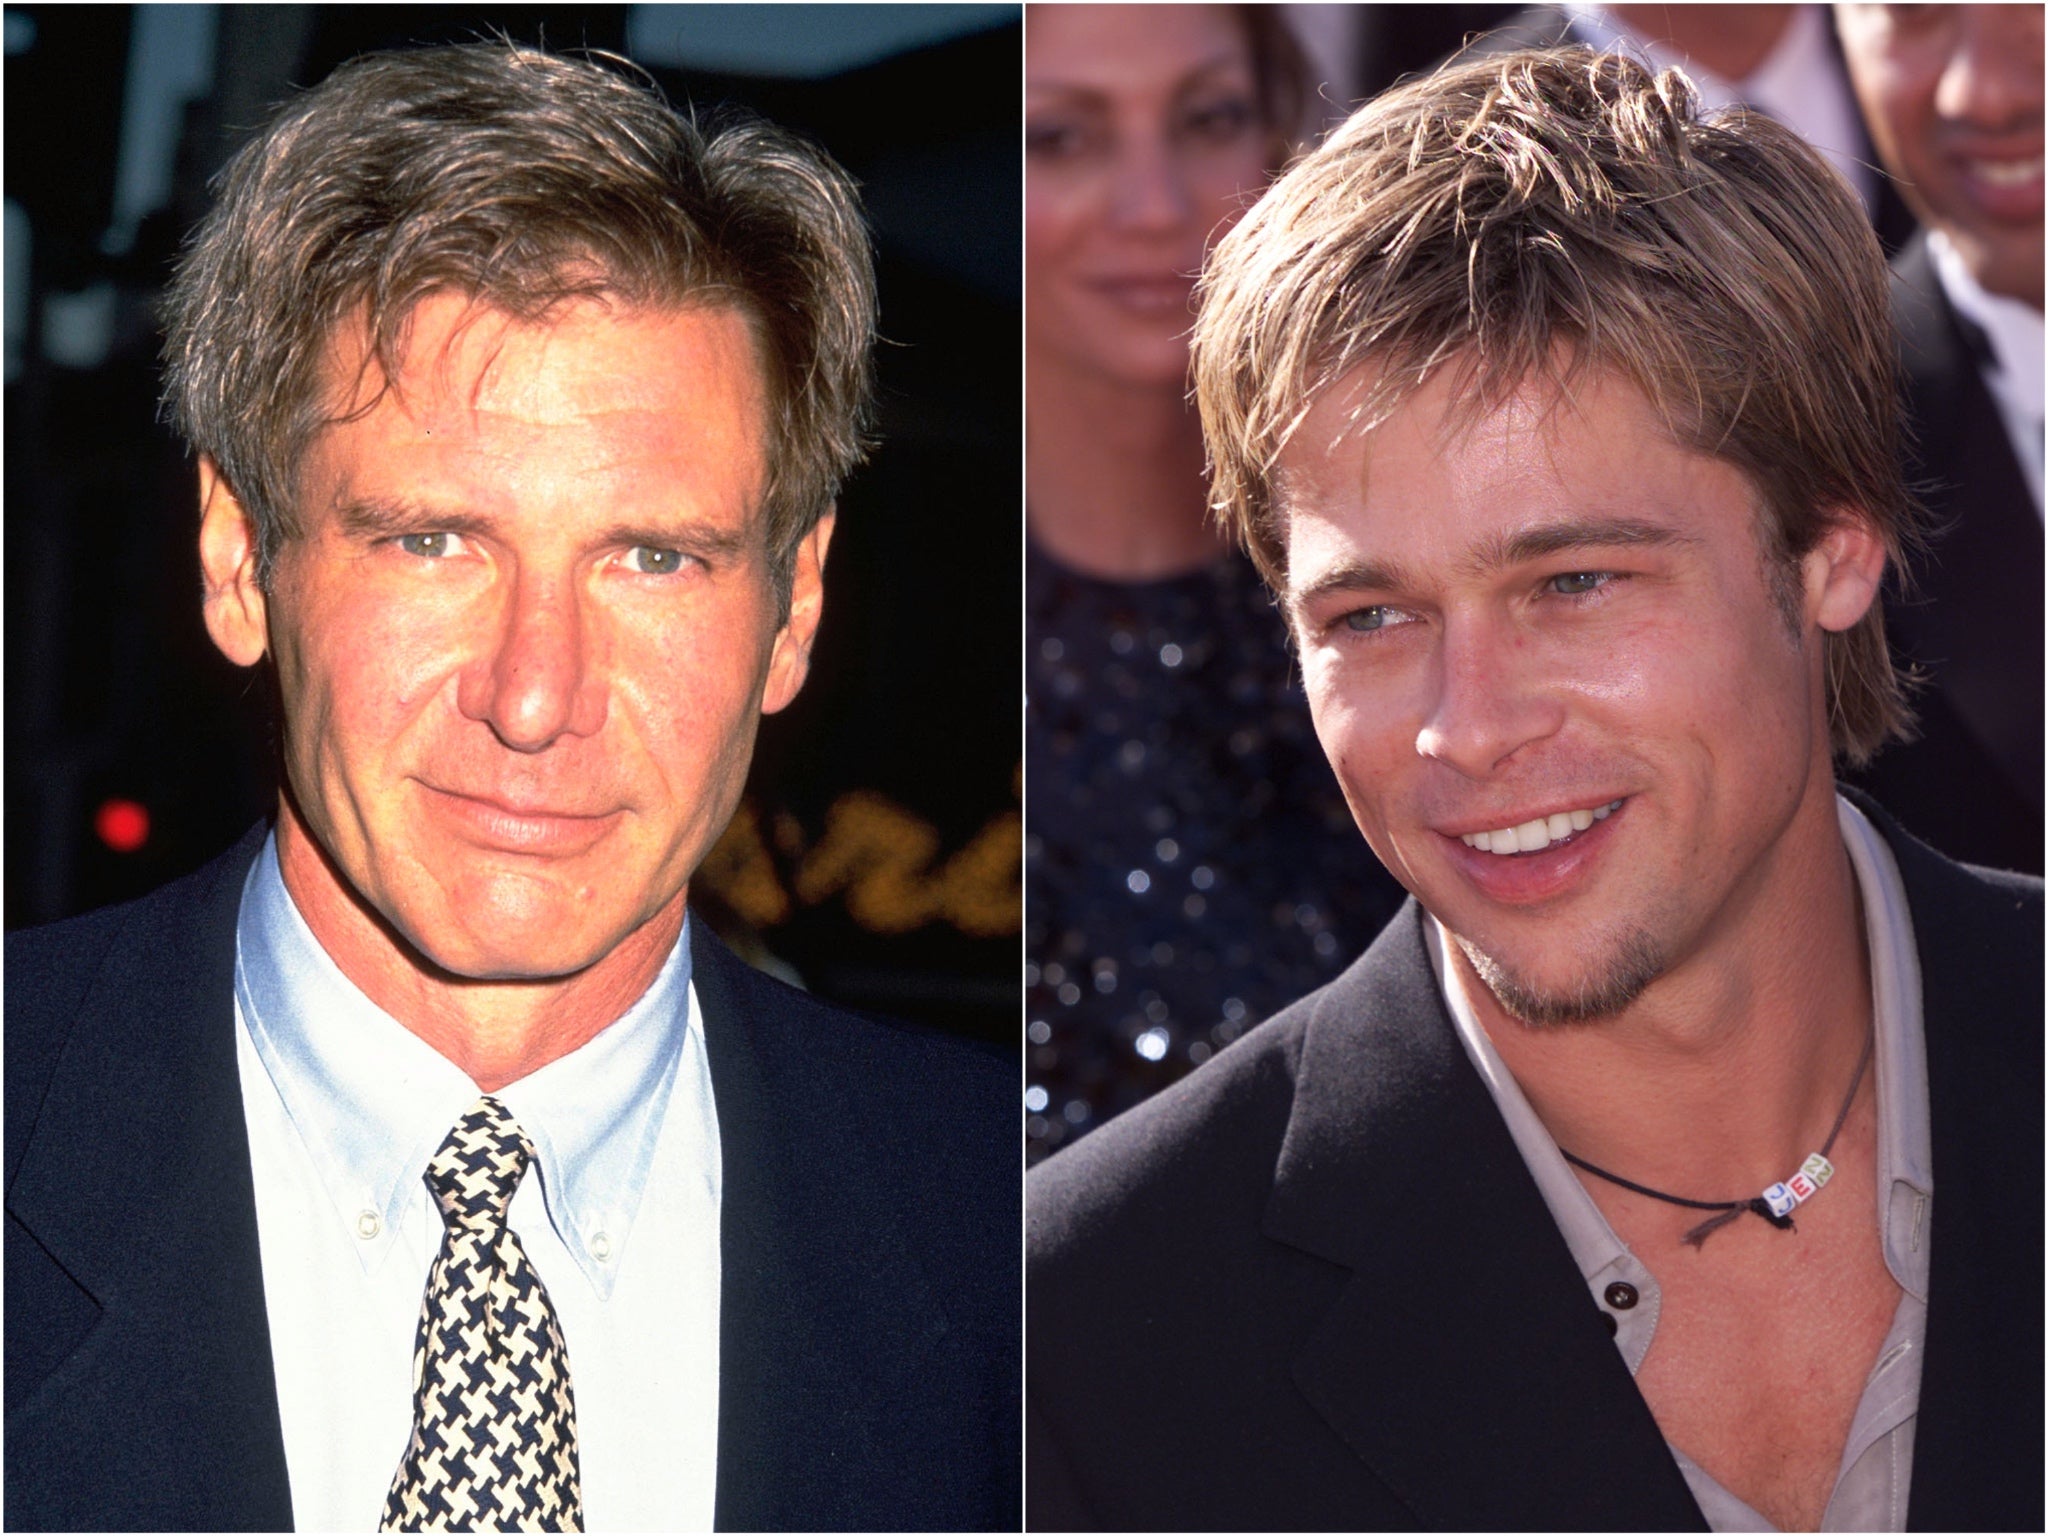 Harrison Ford (left) and Brad Pitt c. 2000